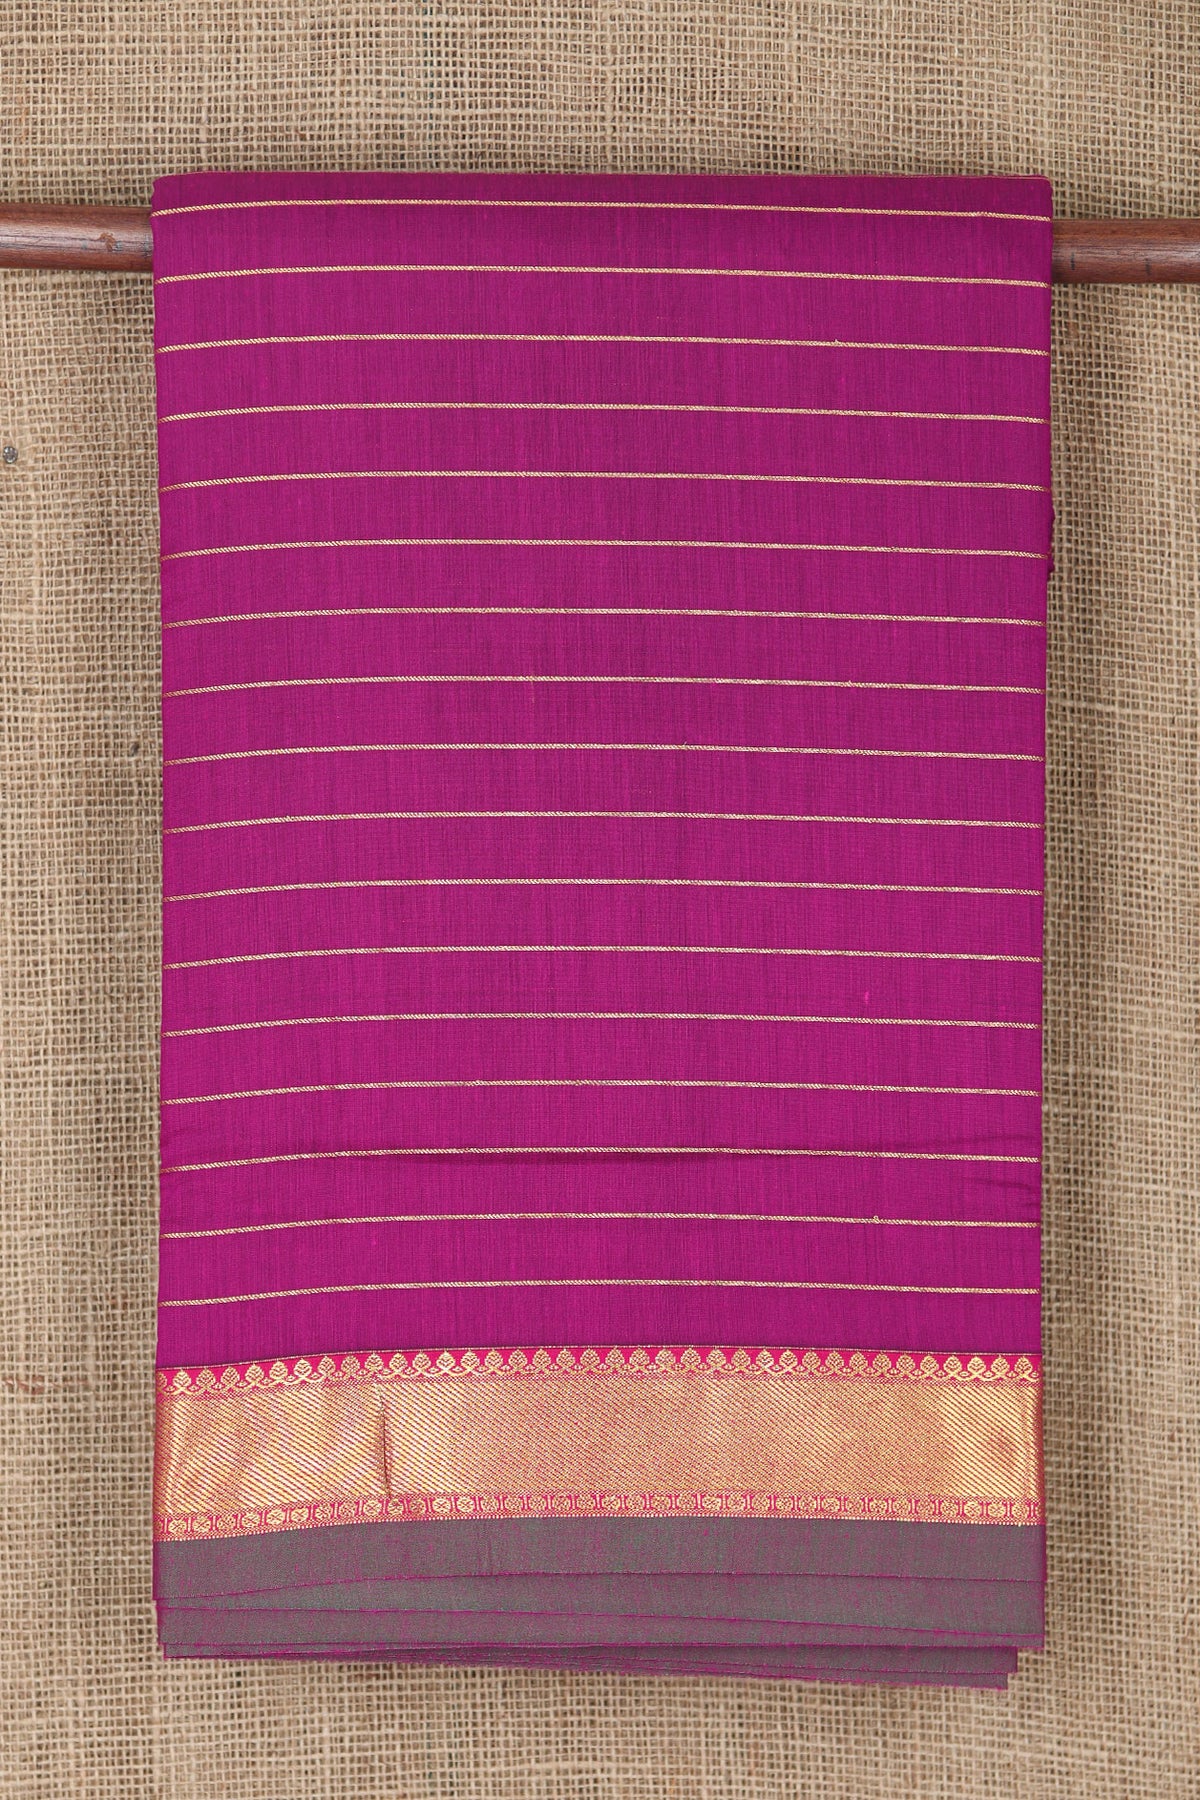 Zari Border With Veldhari Stripes Magenta Purple Apoorva Nine Yards Cotton Saree